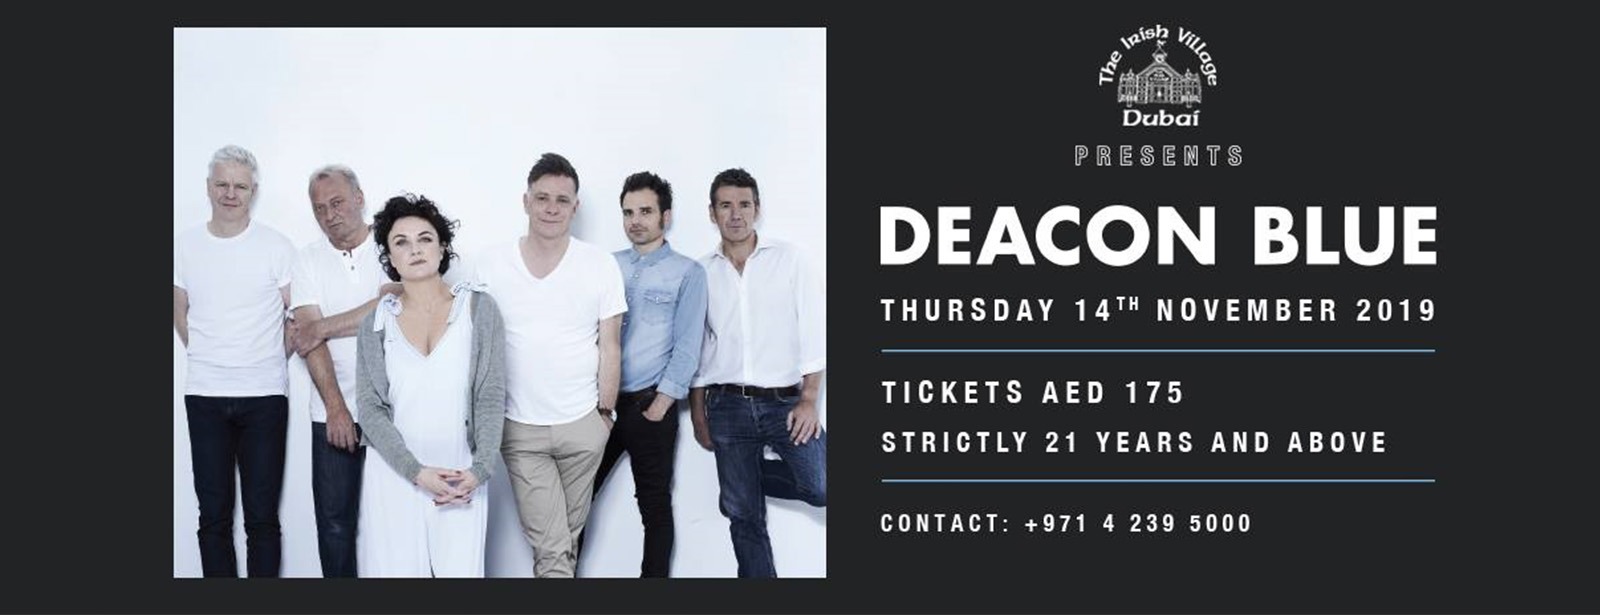 Deacon Blue at The Irish Village, Dubai - Coming Soon in UAE